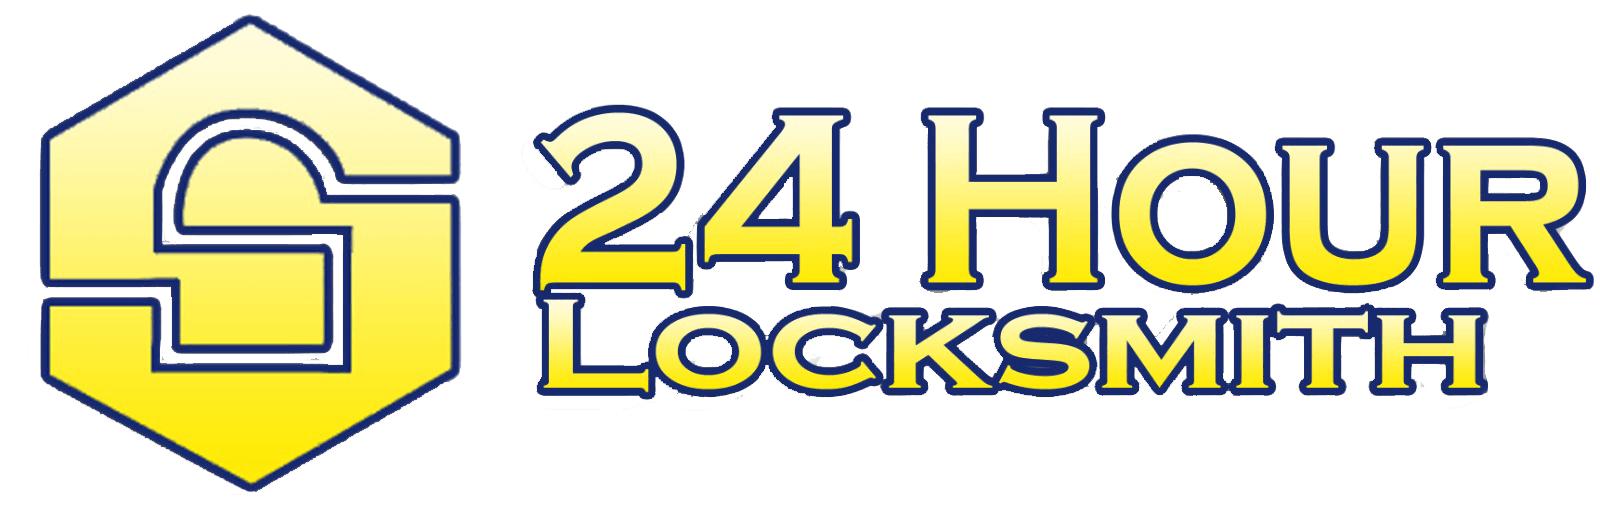 24 Hour Locksmith in Plano, TX